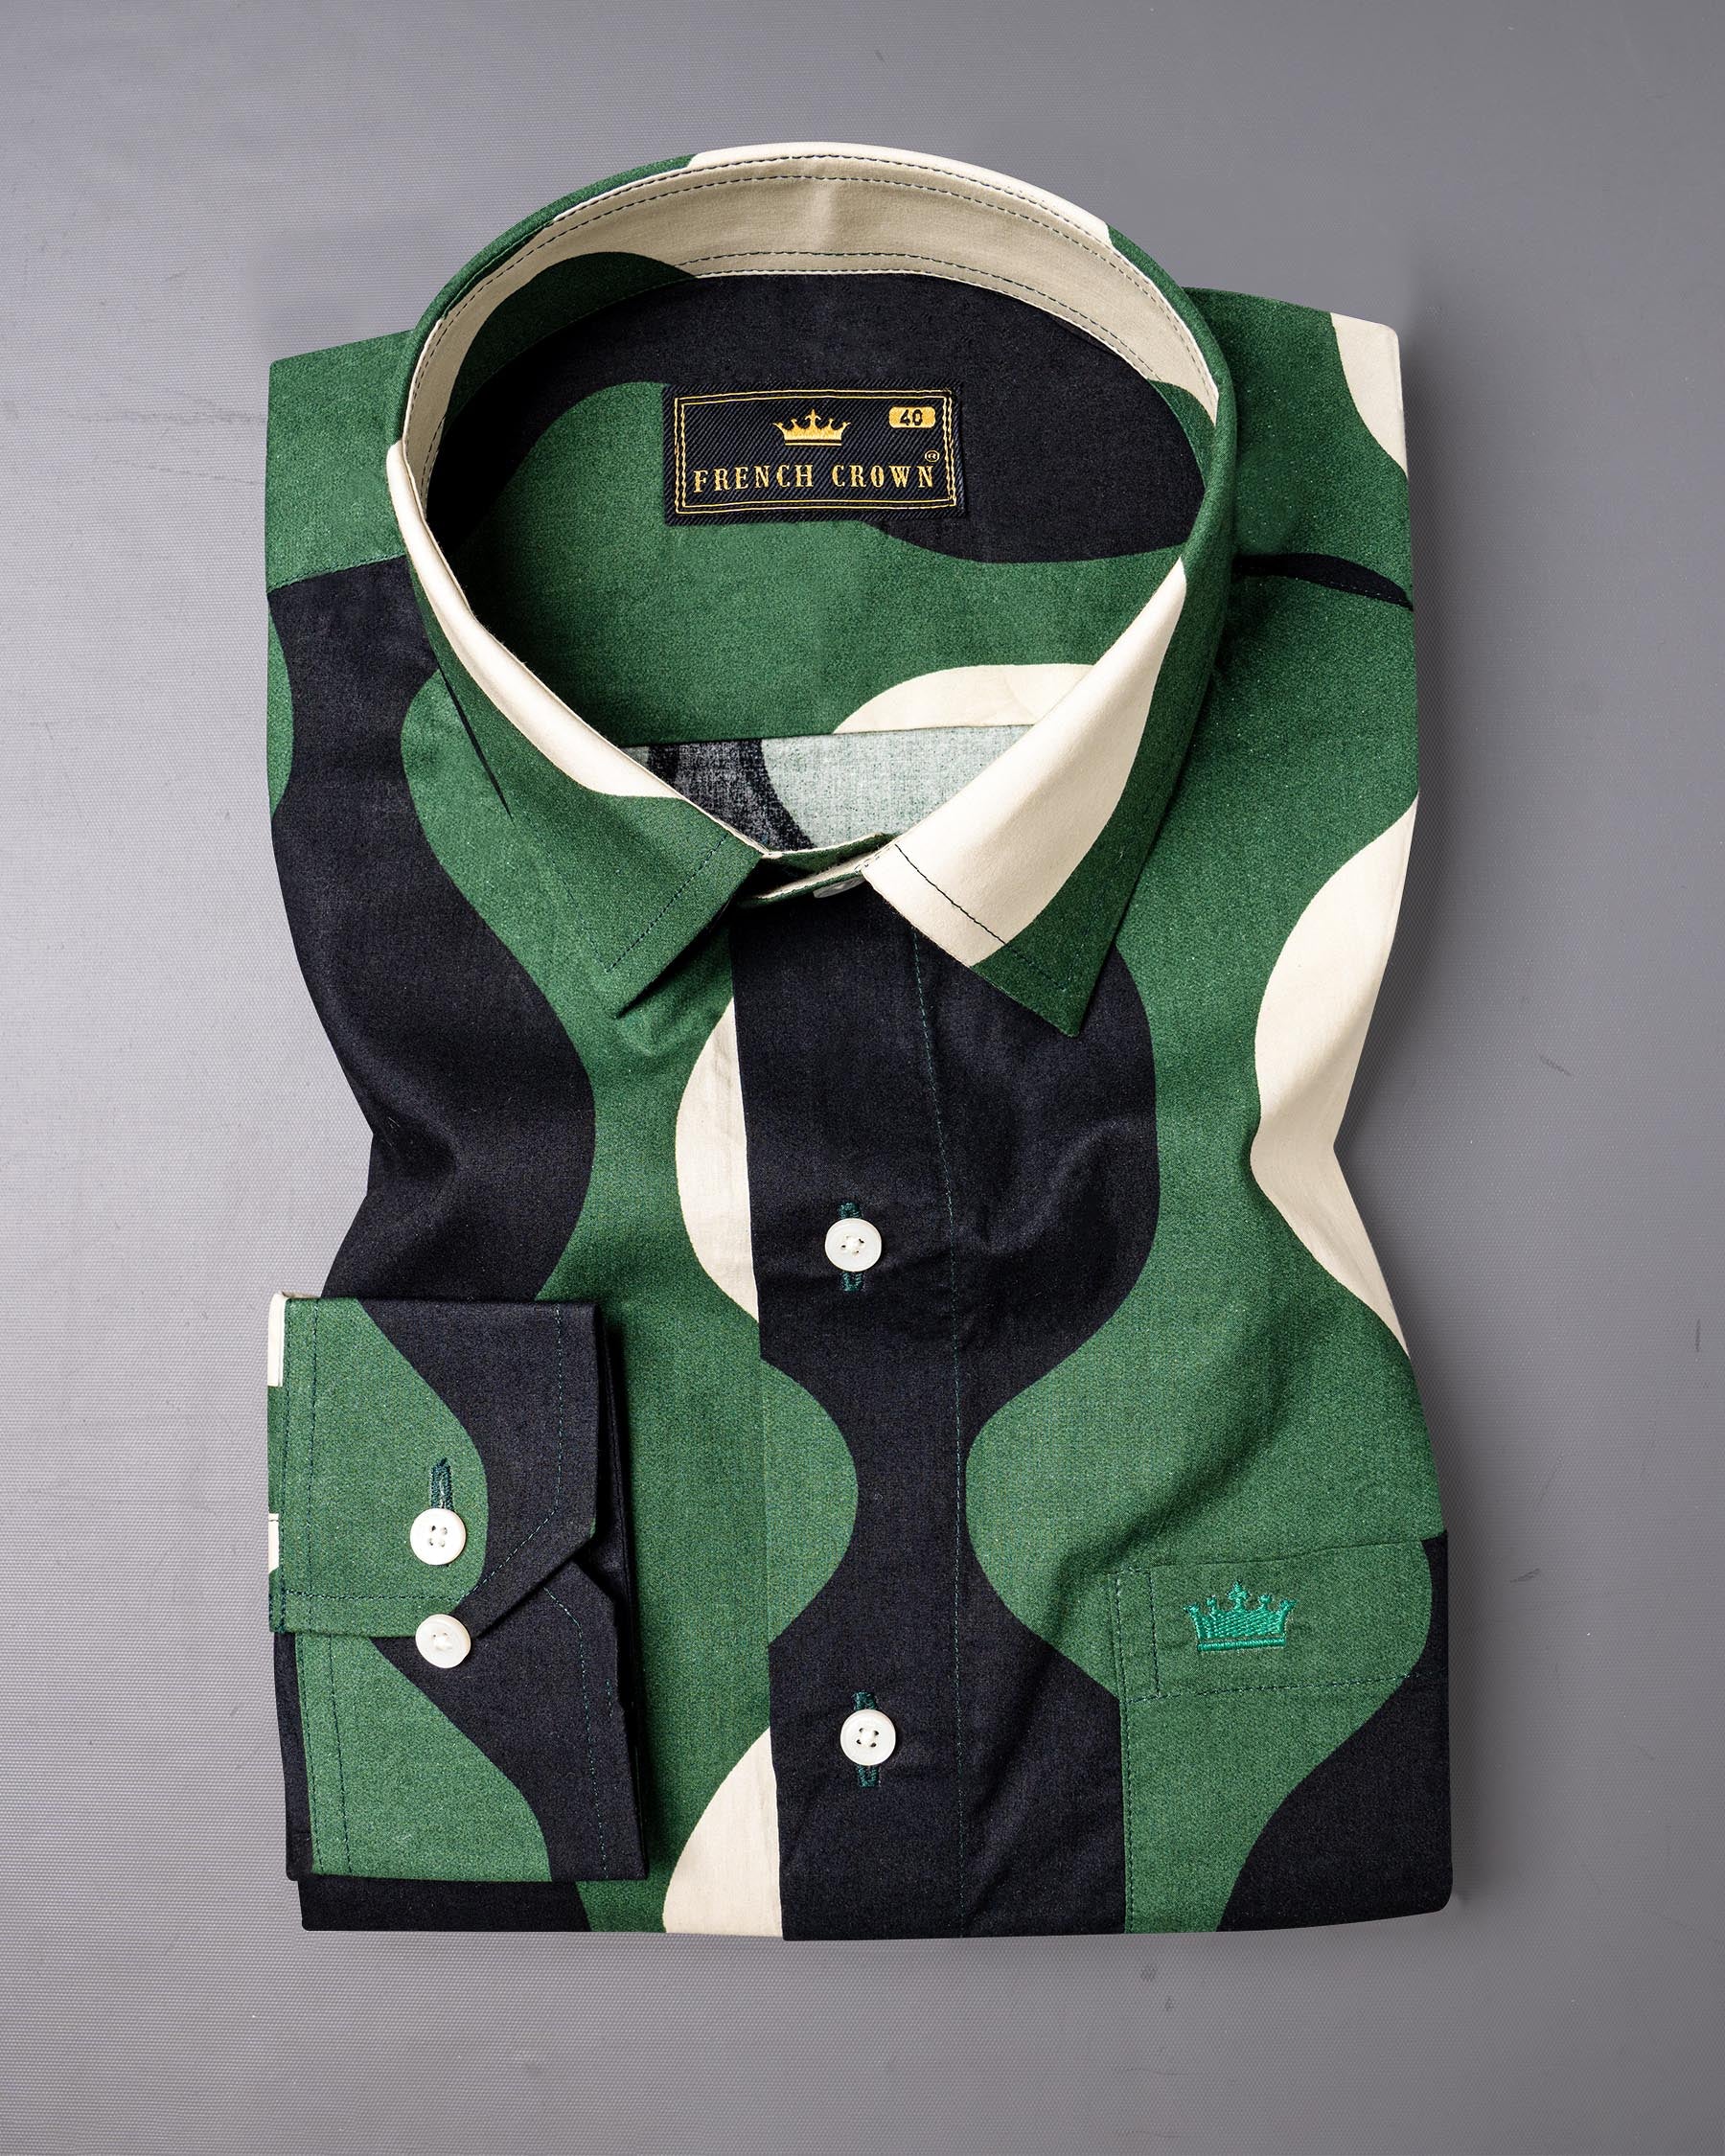 Killarney Green and Black Waves Print Premium Cotton Shirt 6697-38,6697-38,6697-39,6697-39,6697-40,6697-40,6697-42,6697-42,6697-44,6697-44,6697-46,6697-46,6697-48,6697-48,6697-50,6697-50,6697-52,6697-52